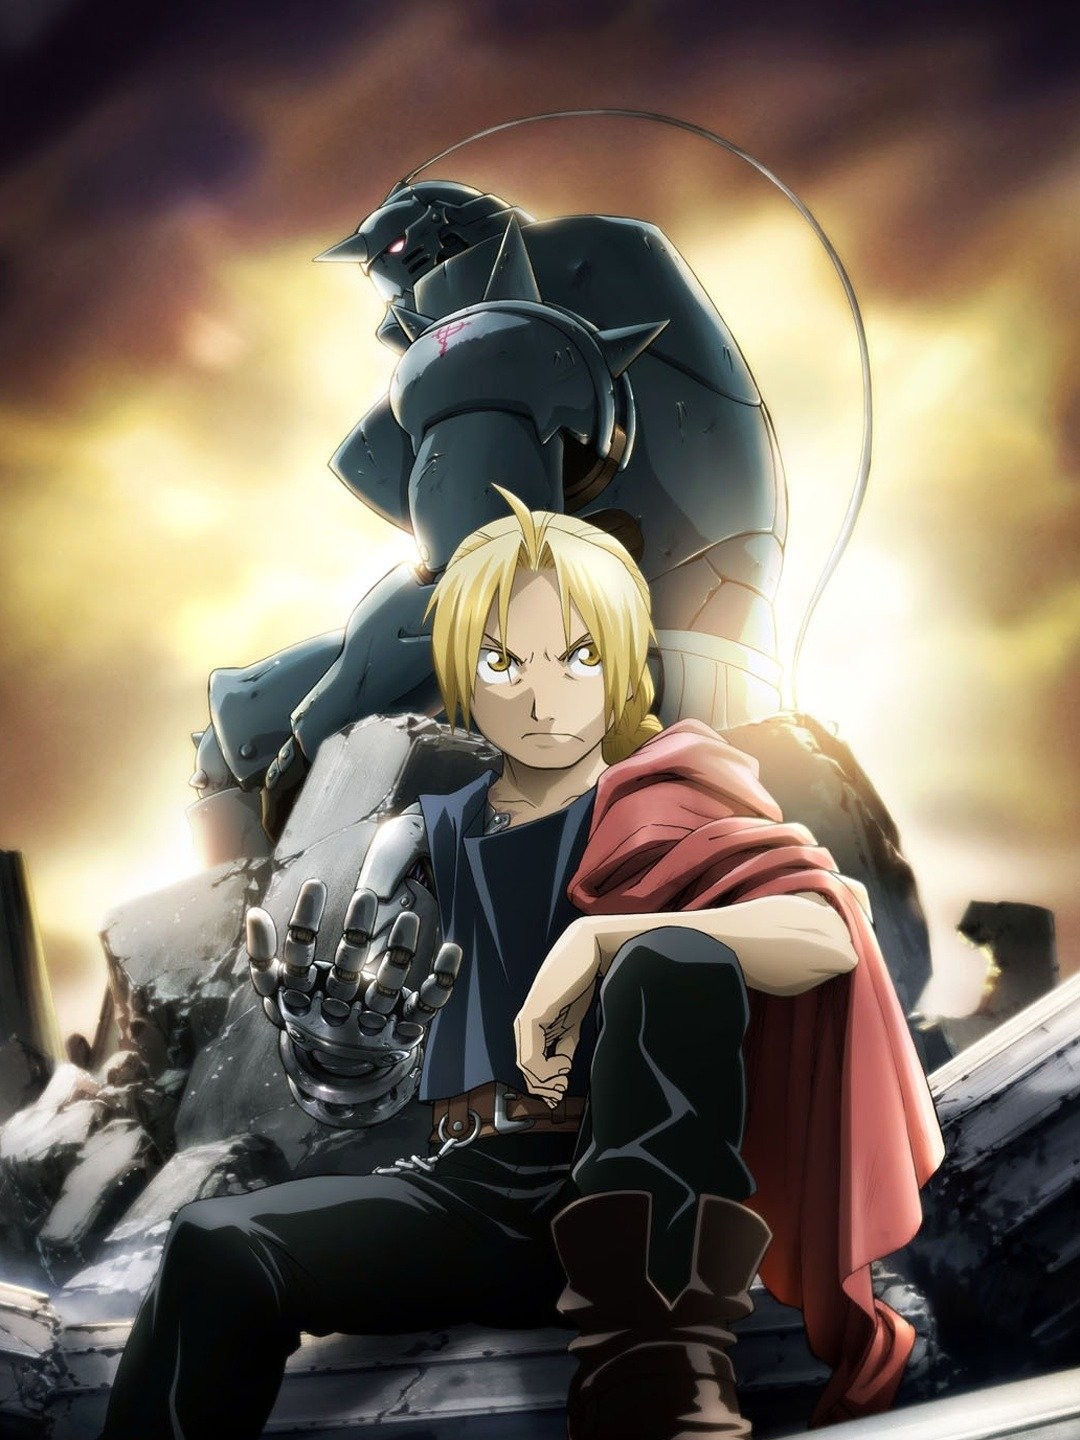 Fullmetal Alchemist Mobile Trailer Reveals Video Game Adaptation of Anime